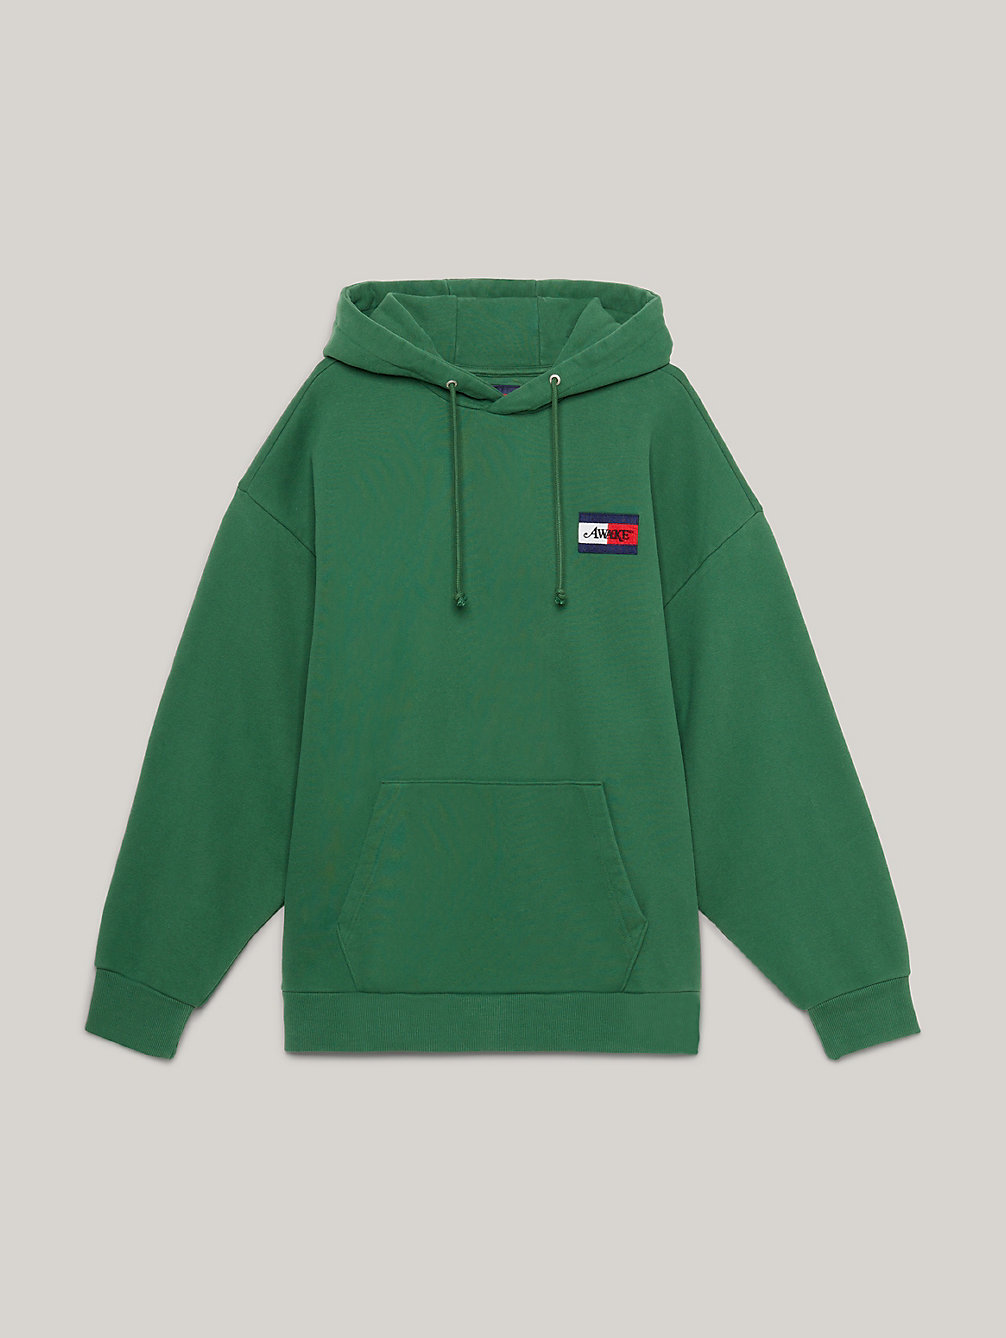 green tommy x awake ny relaxed fit hoodie mit großem logo für herren - tommy jeans